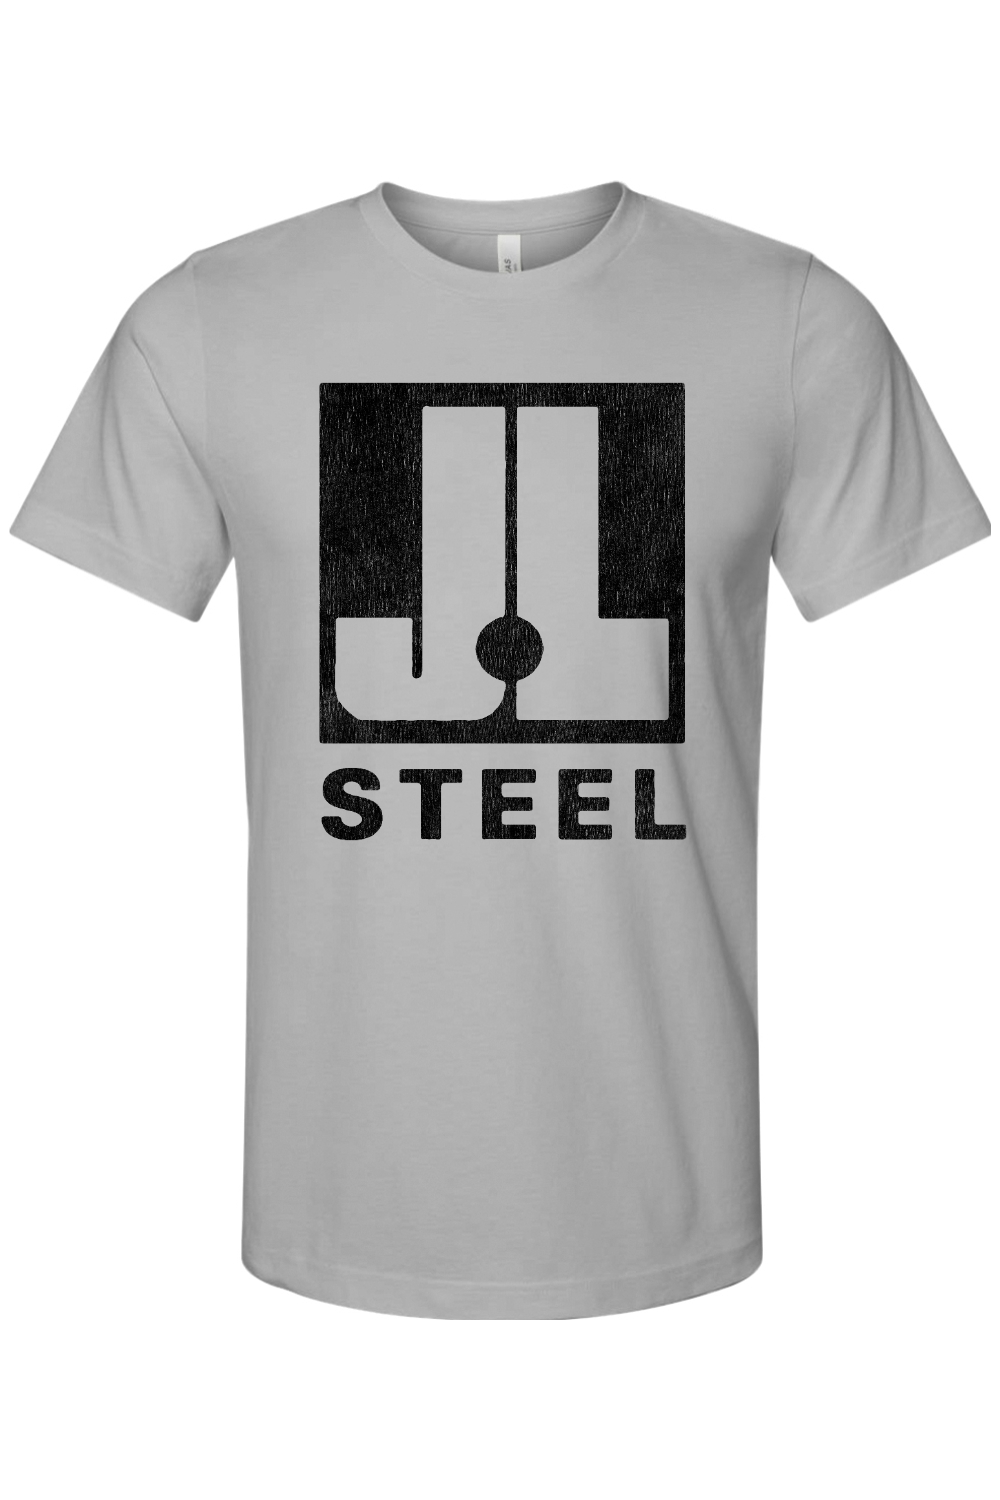 J&L Steel - Black - Bella + Canvas Jersey Tee - Yinzylvania